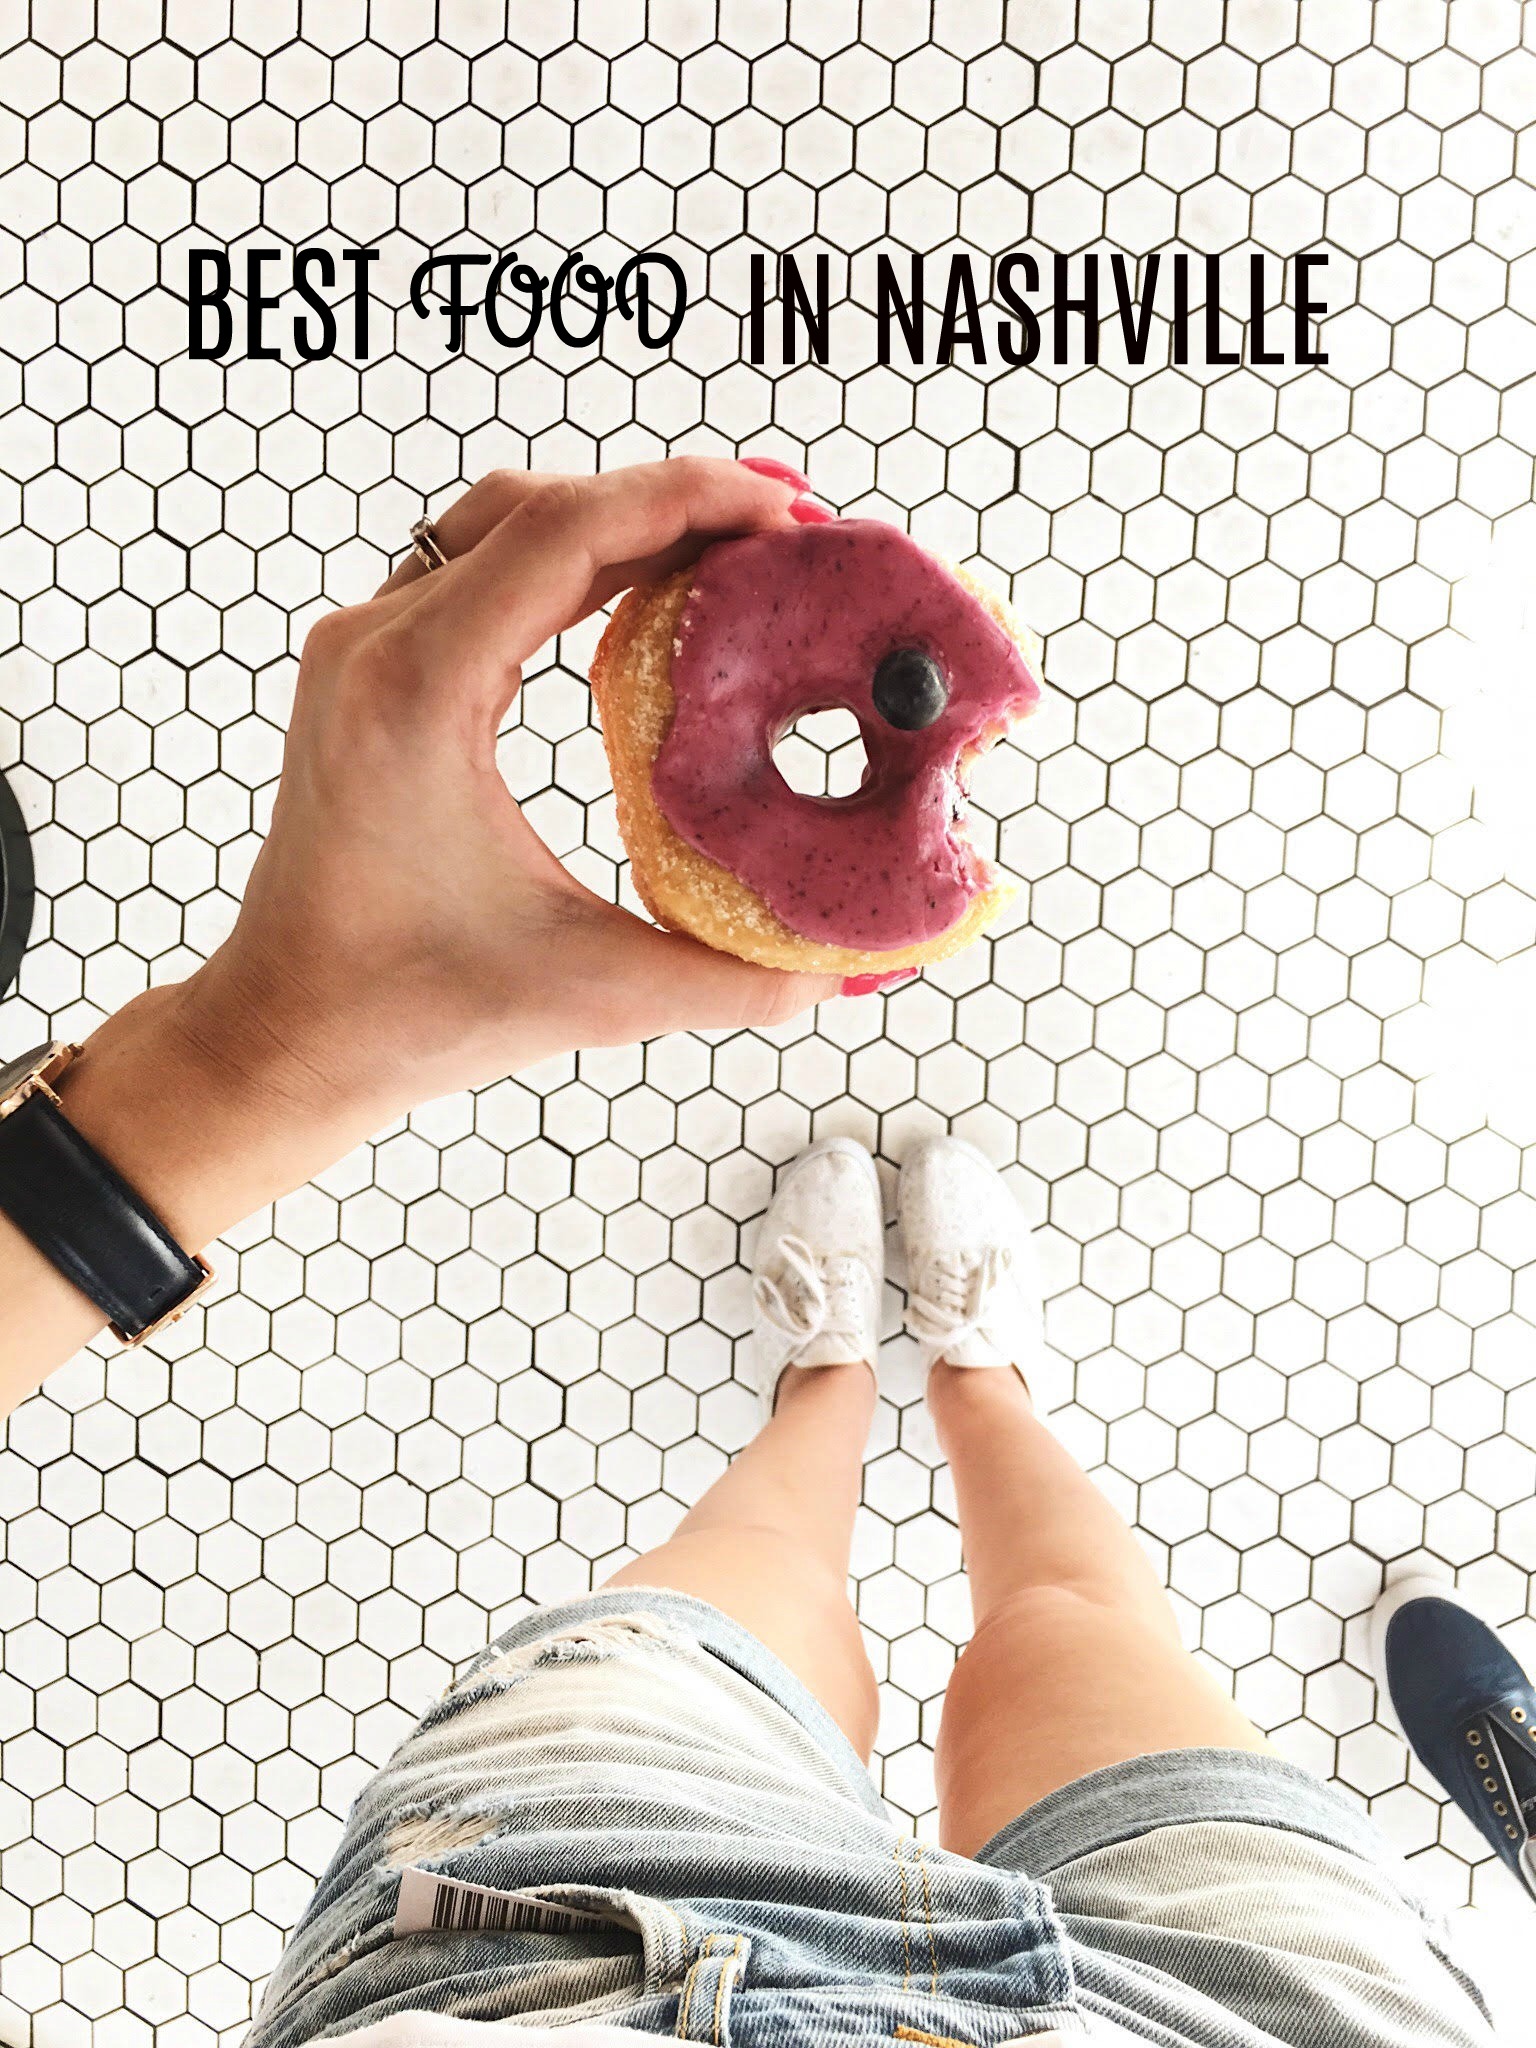 Best Food in Nashville